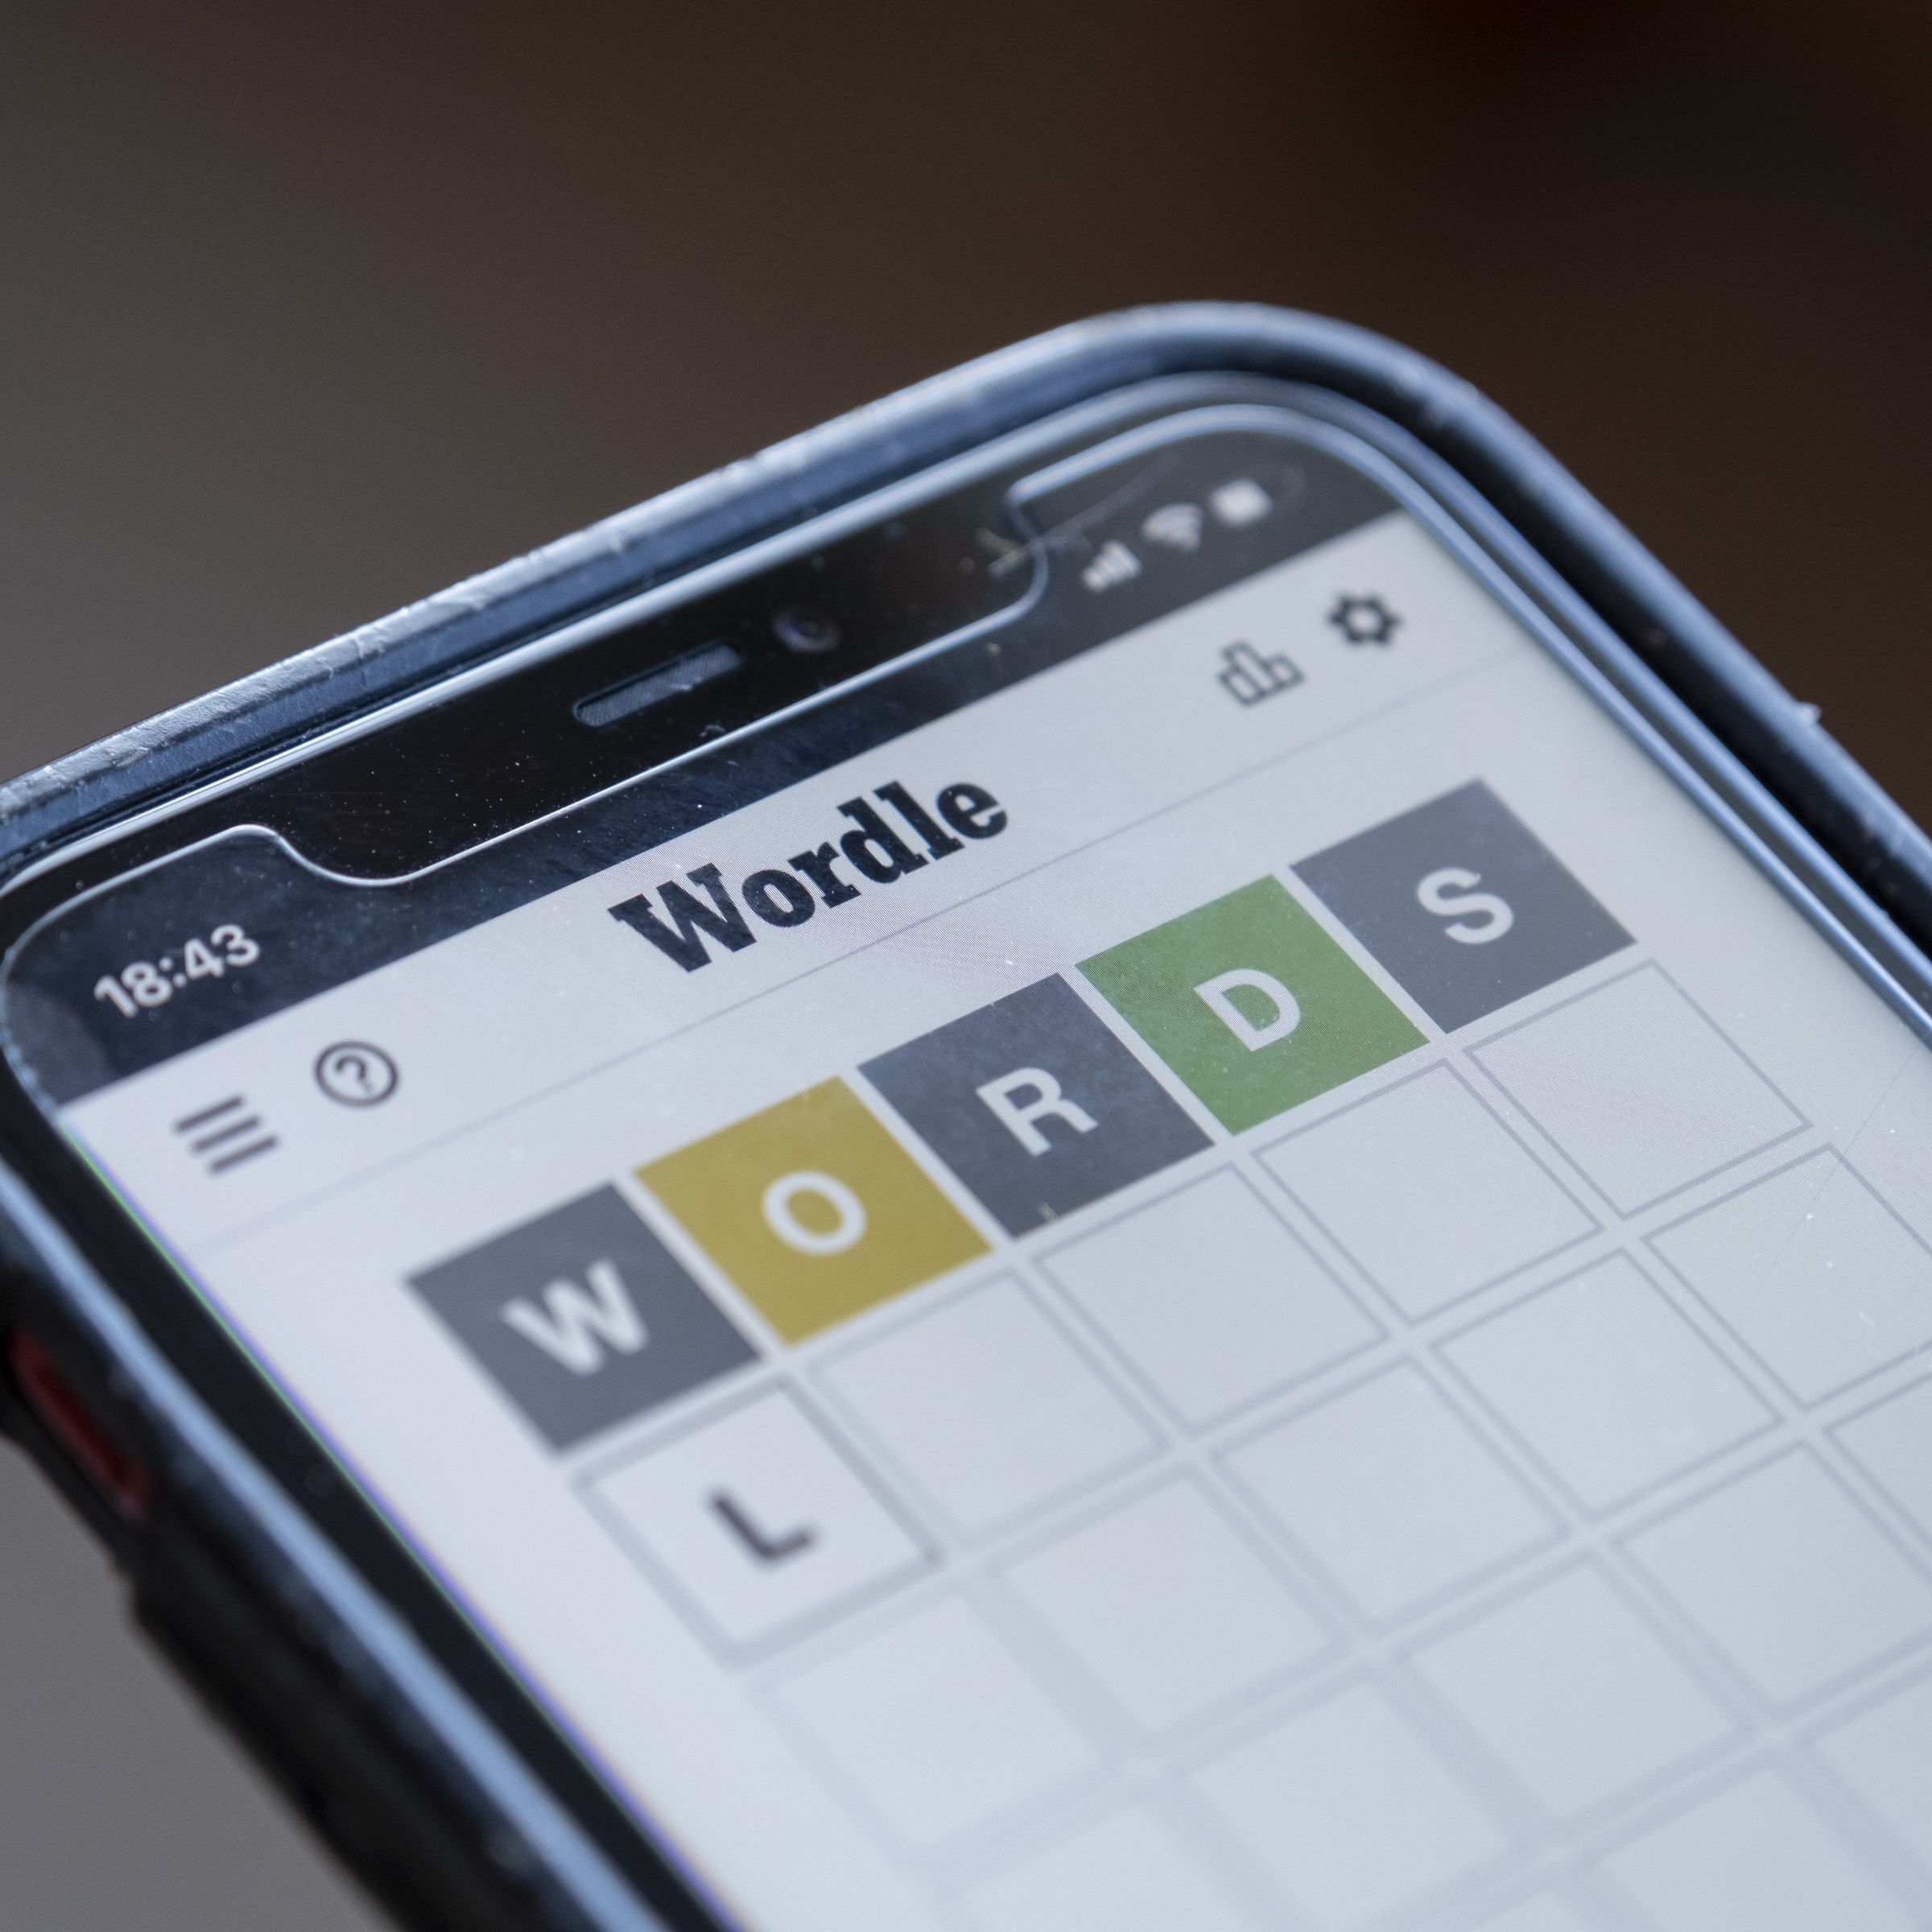 Wordle Smartphone Game